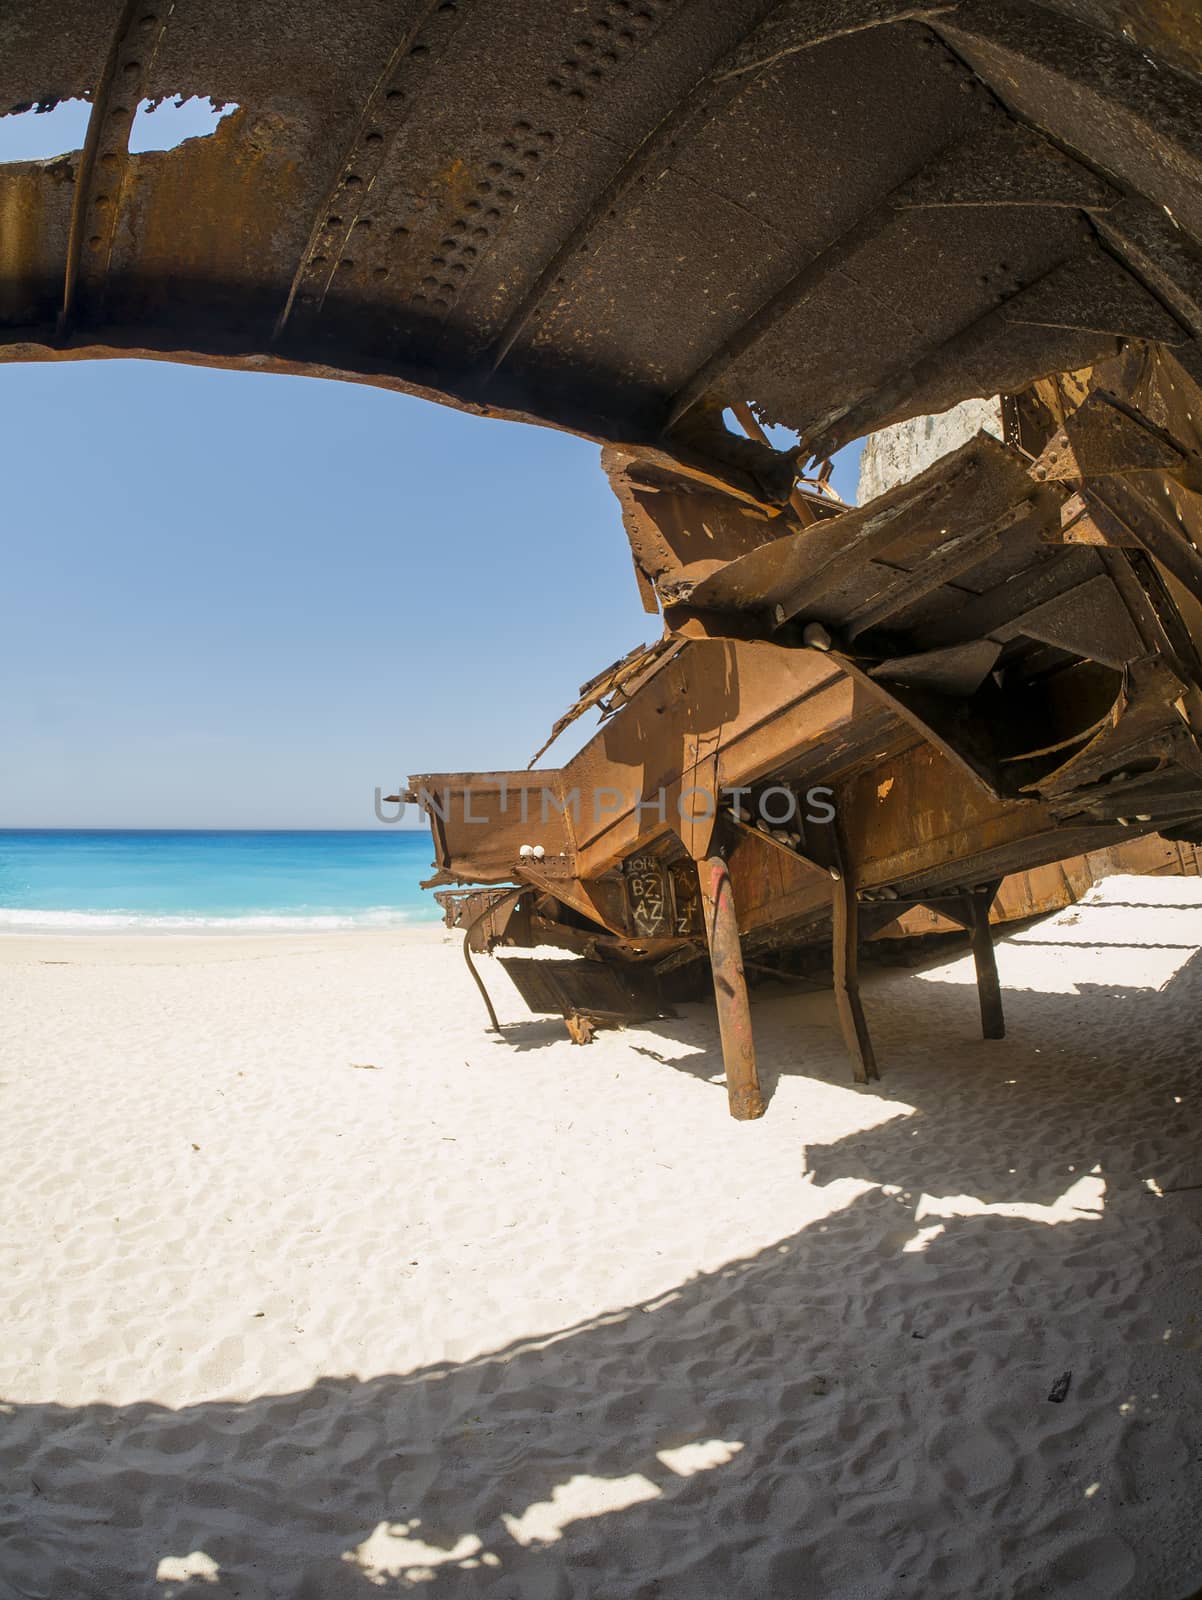 The famous Navagio Shipwreck beach in Zakynthos island Greece